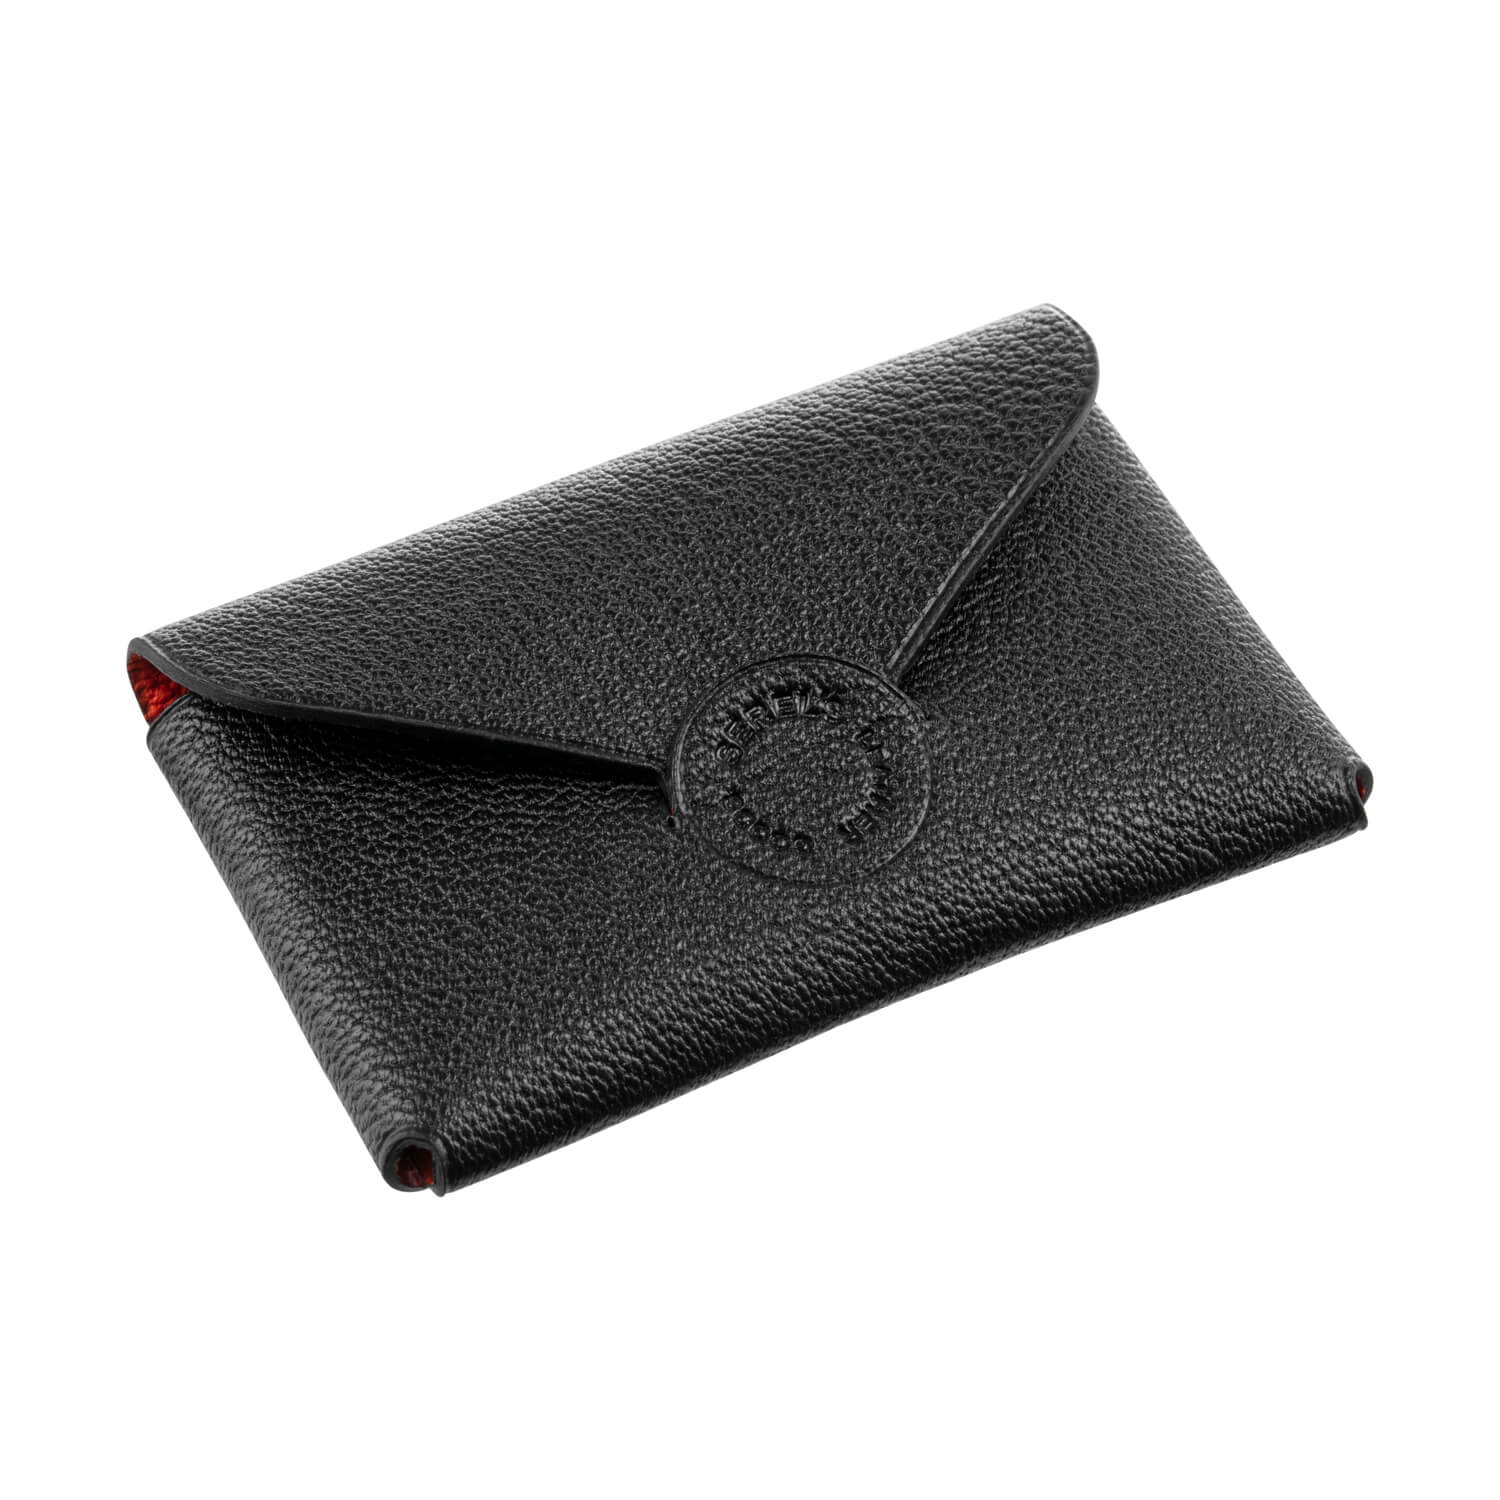 Louis Vuitton, Bags, Louis Vuitton Envelope Business Card Holder